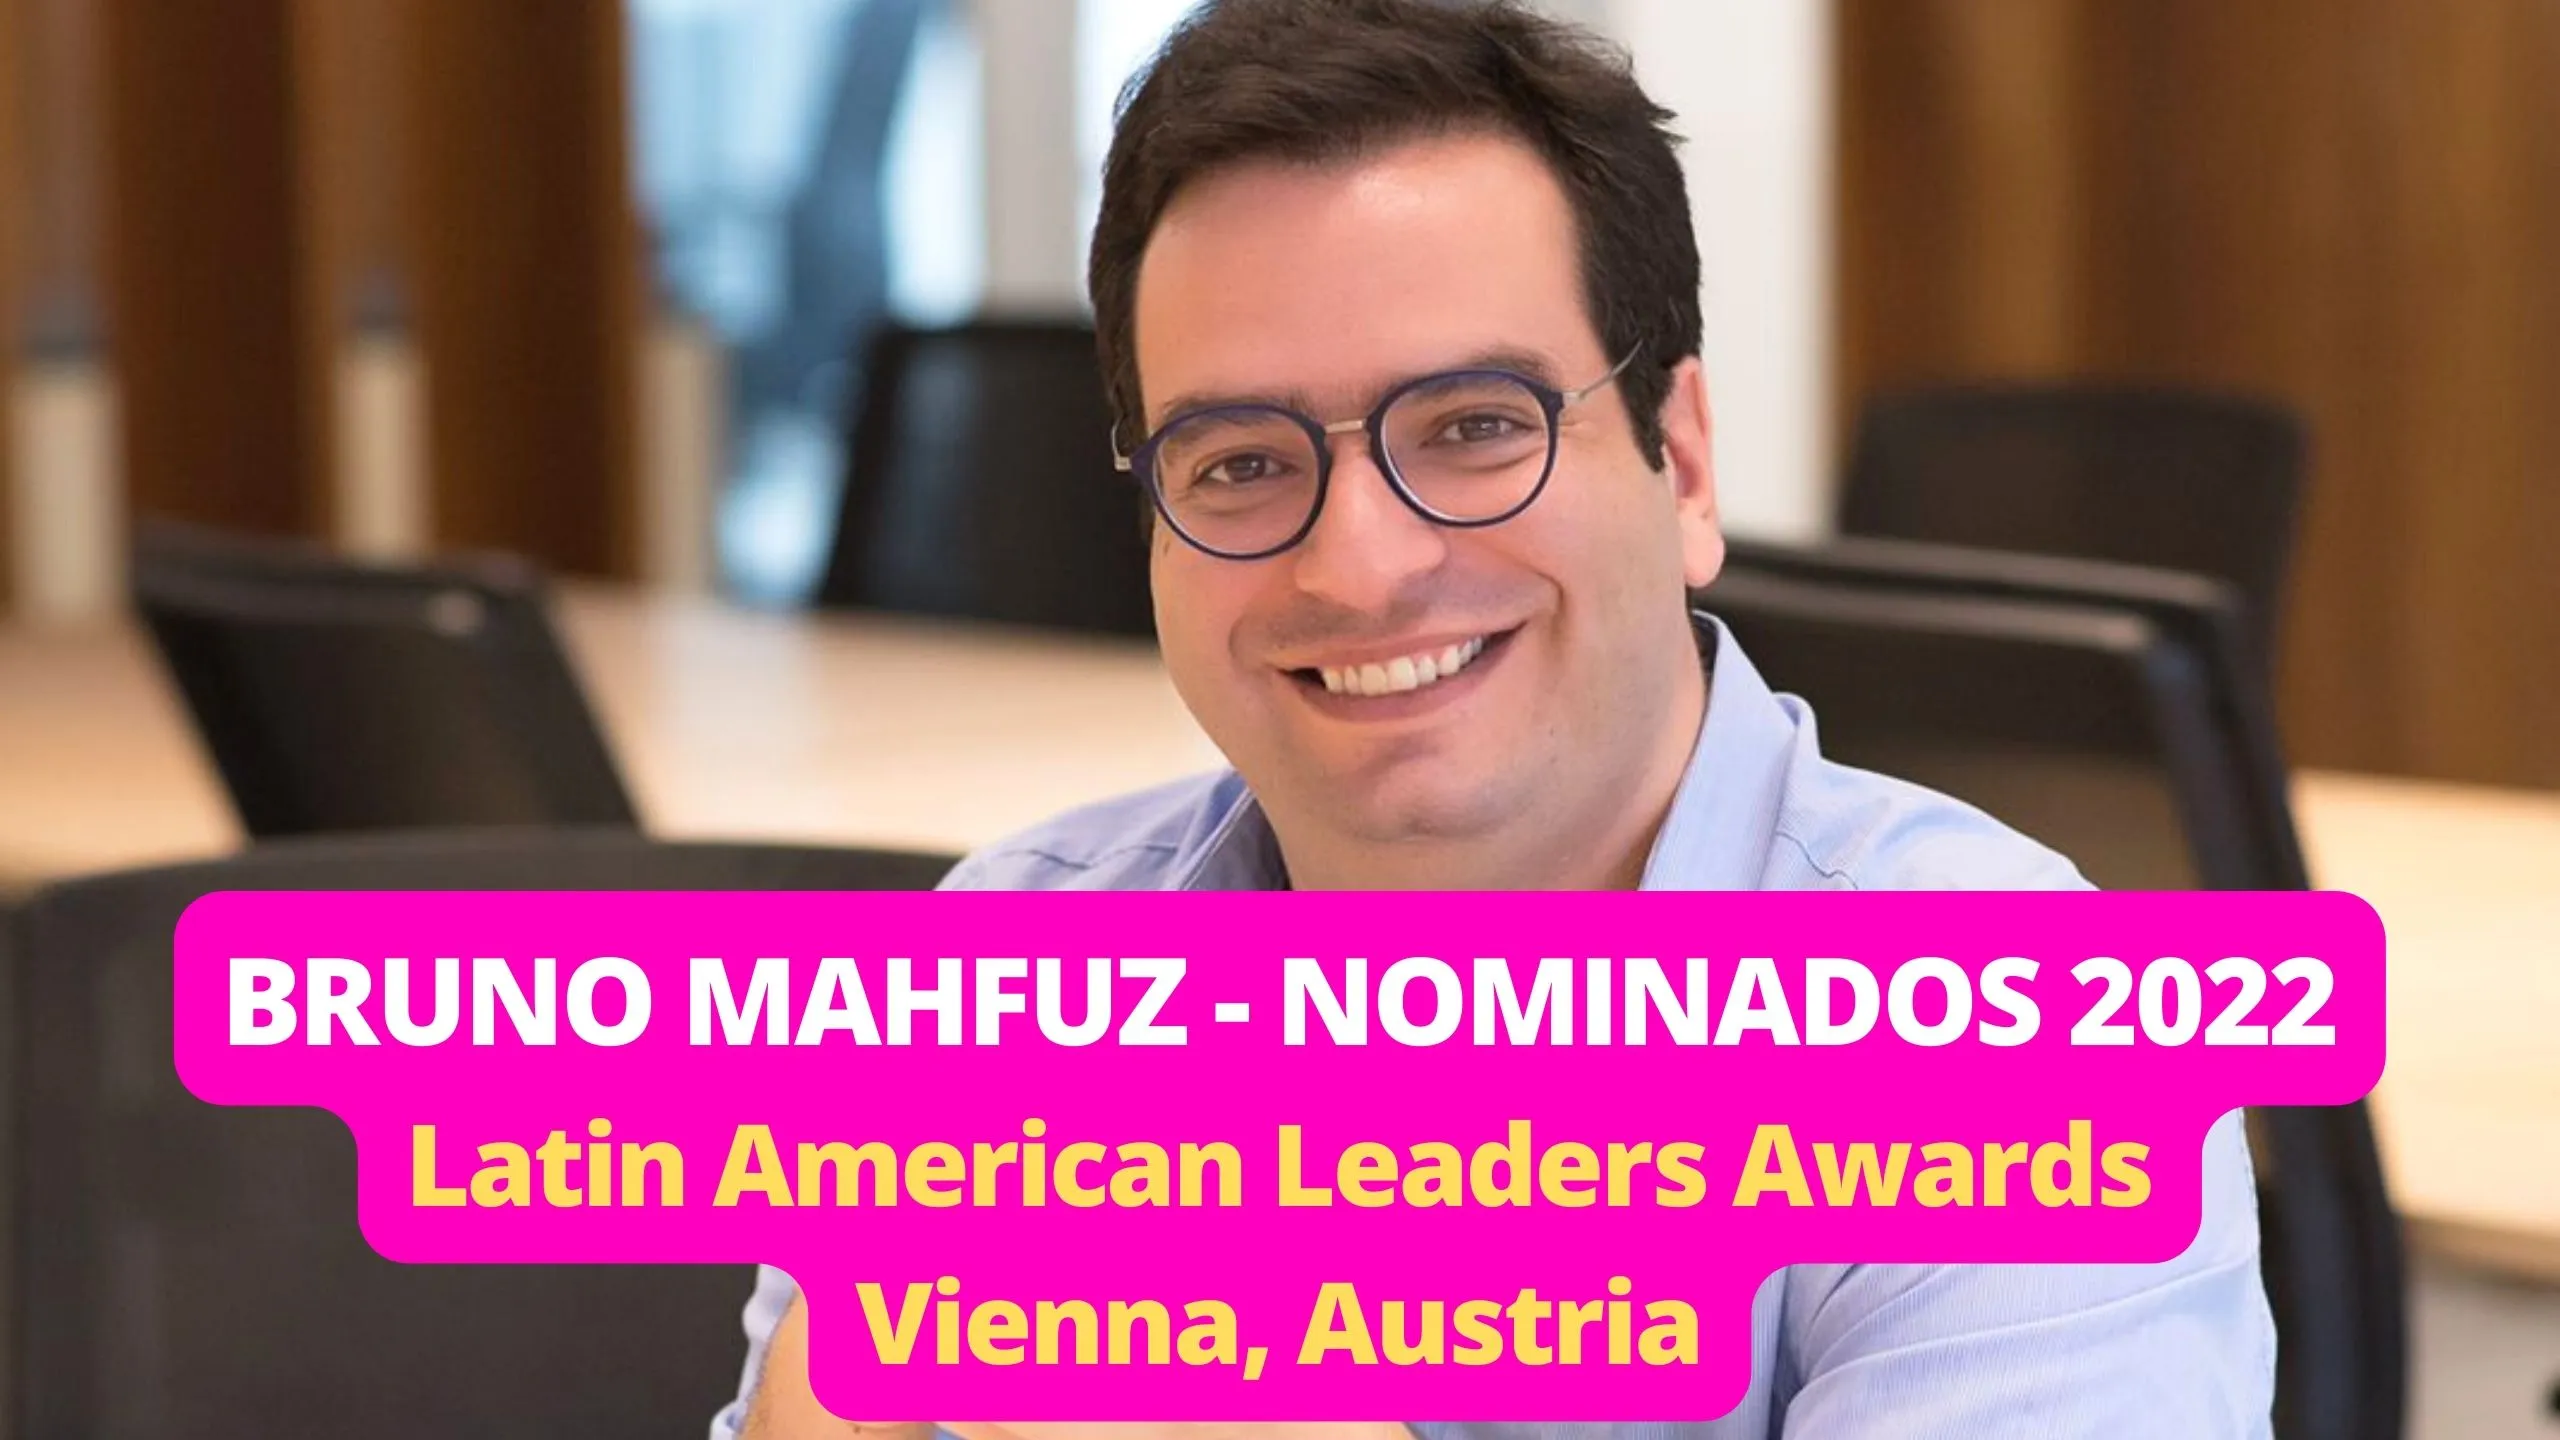 Bruno Mahfuz - Nominados 2022 - Latin American Leaders Awards